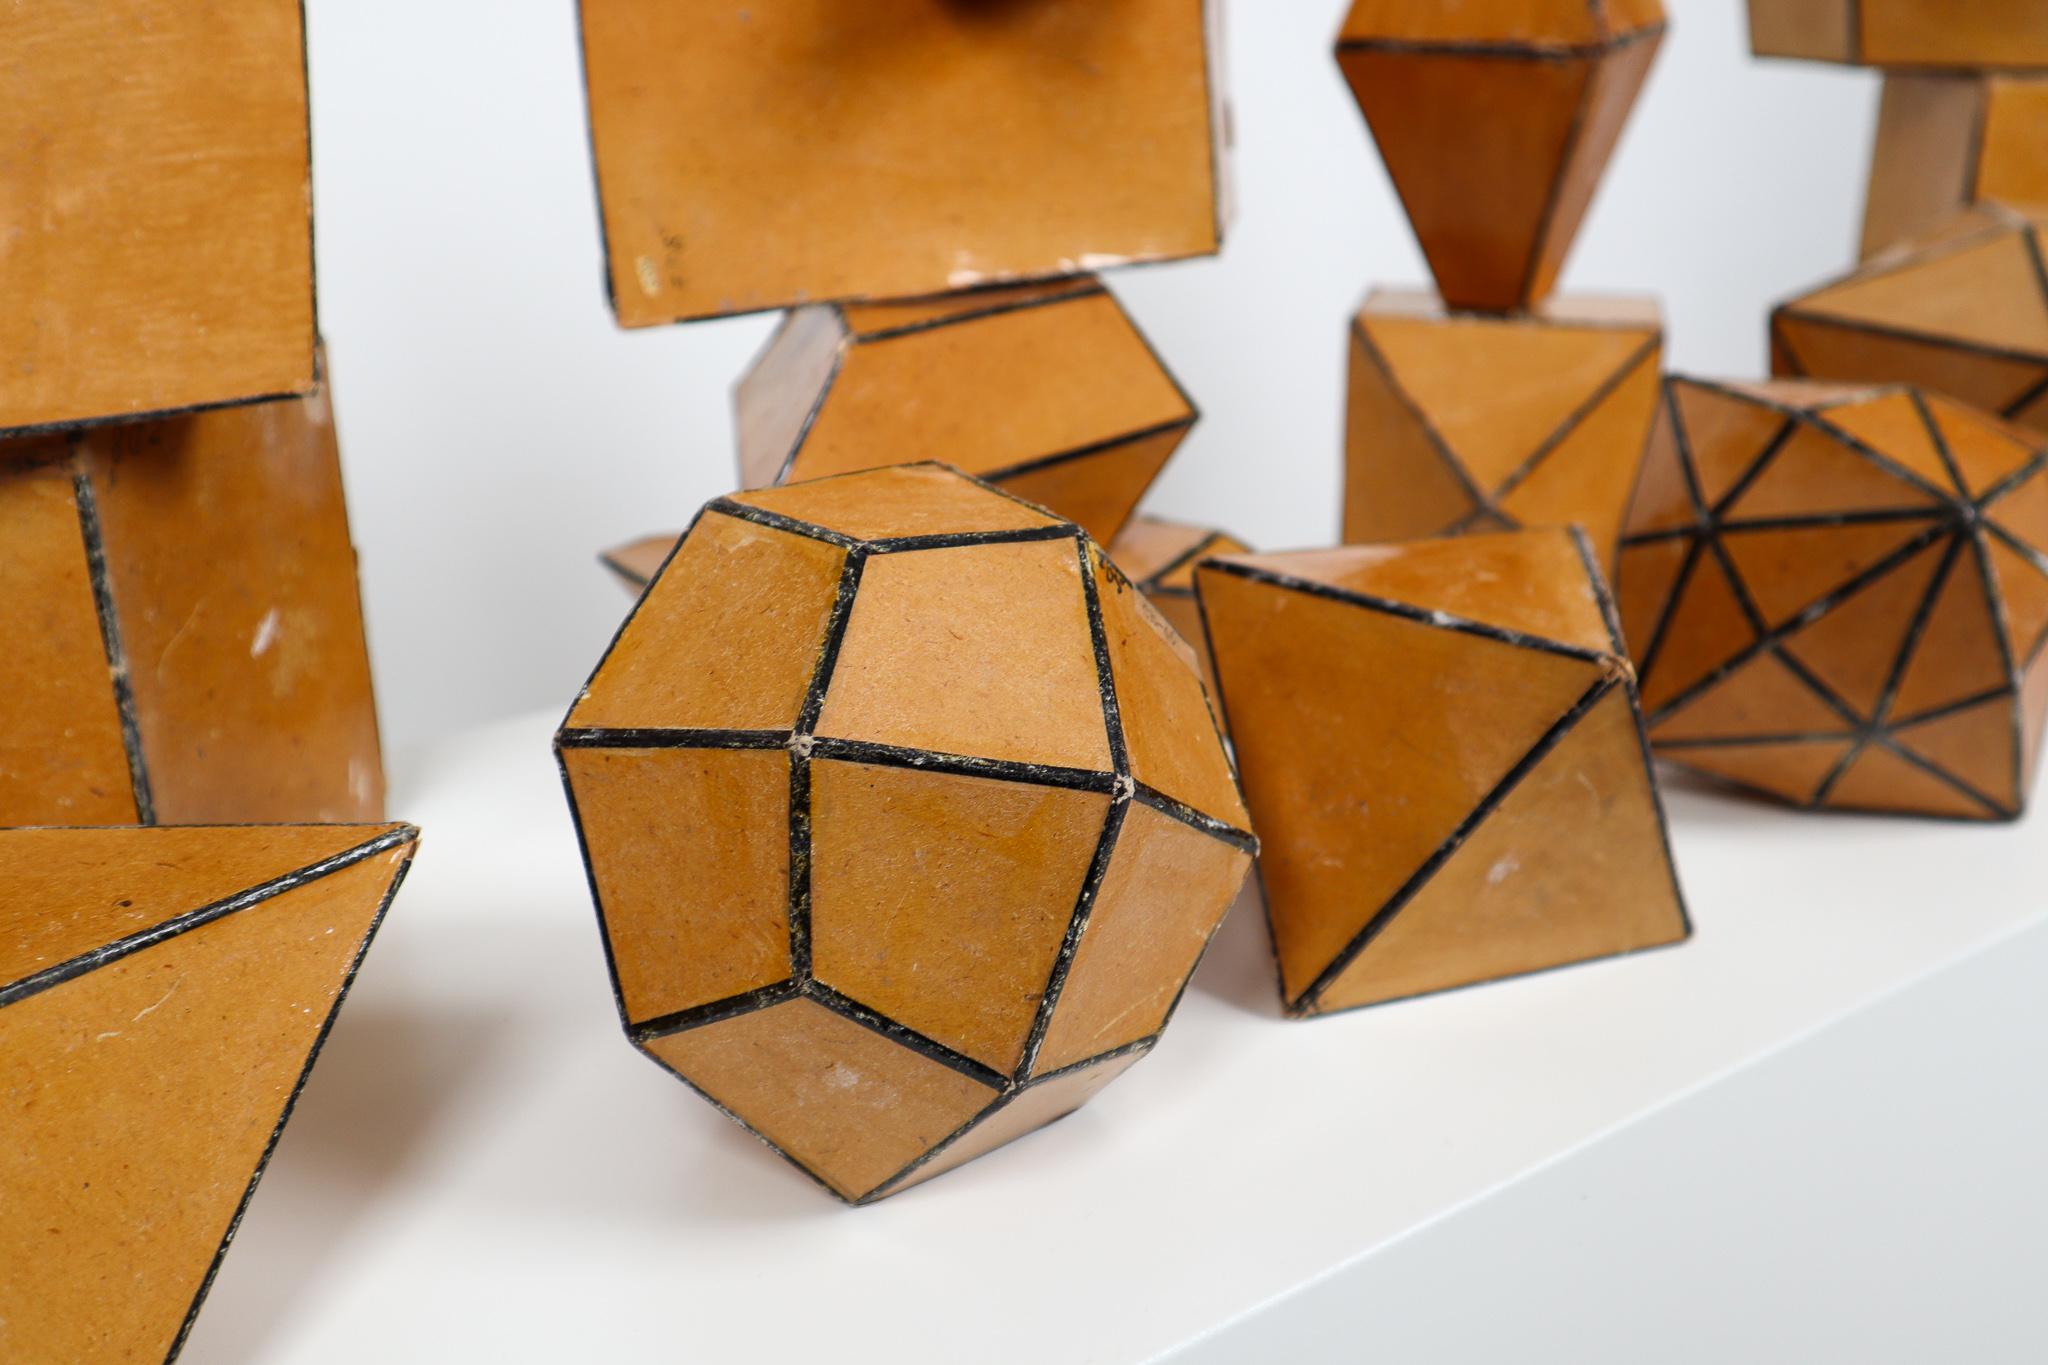 Set of 24 Geometric Science Cardboard Classroom Crystal Models Praque, 1920 1